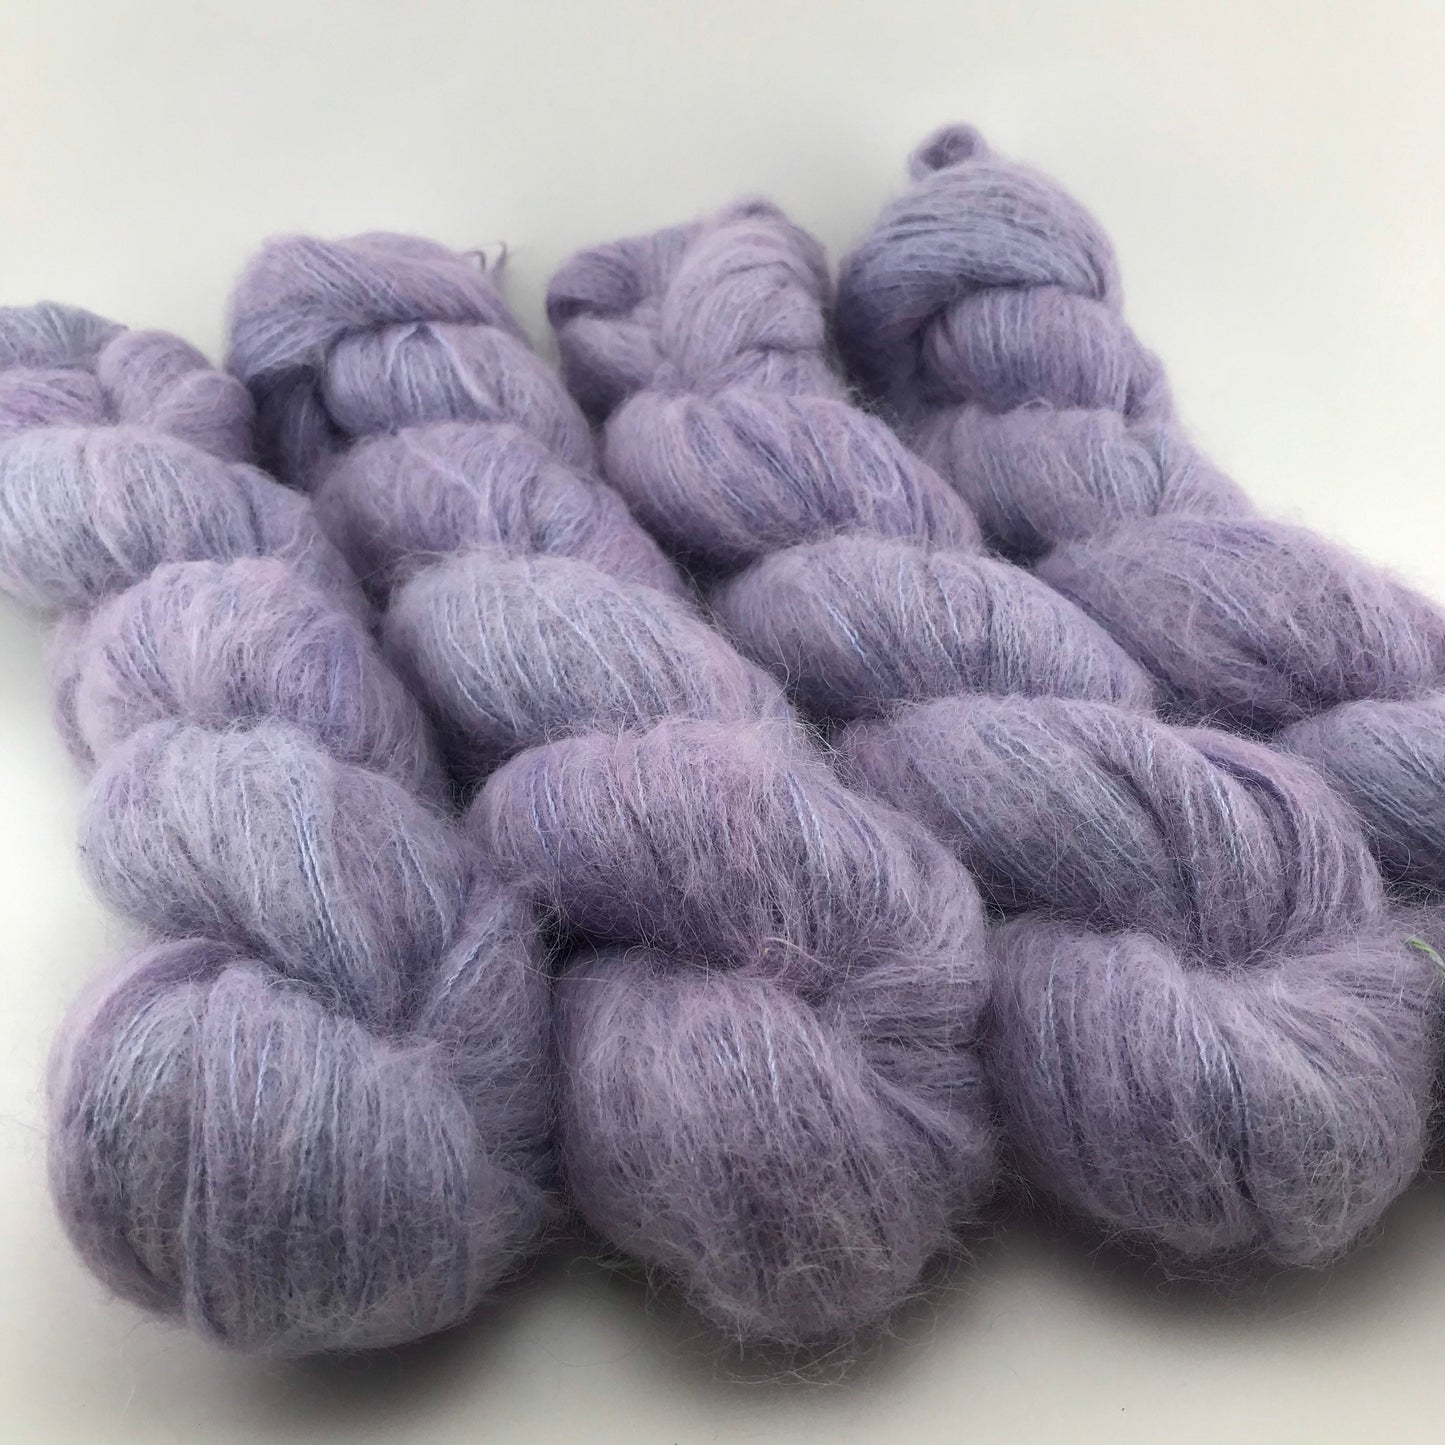 VIOLETS ARE BLUE - Purple Lilac Violet Blue Suri Alpaca Silk